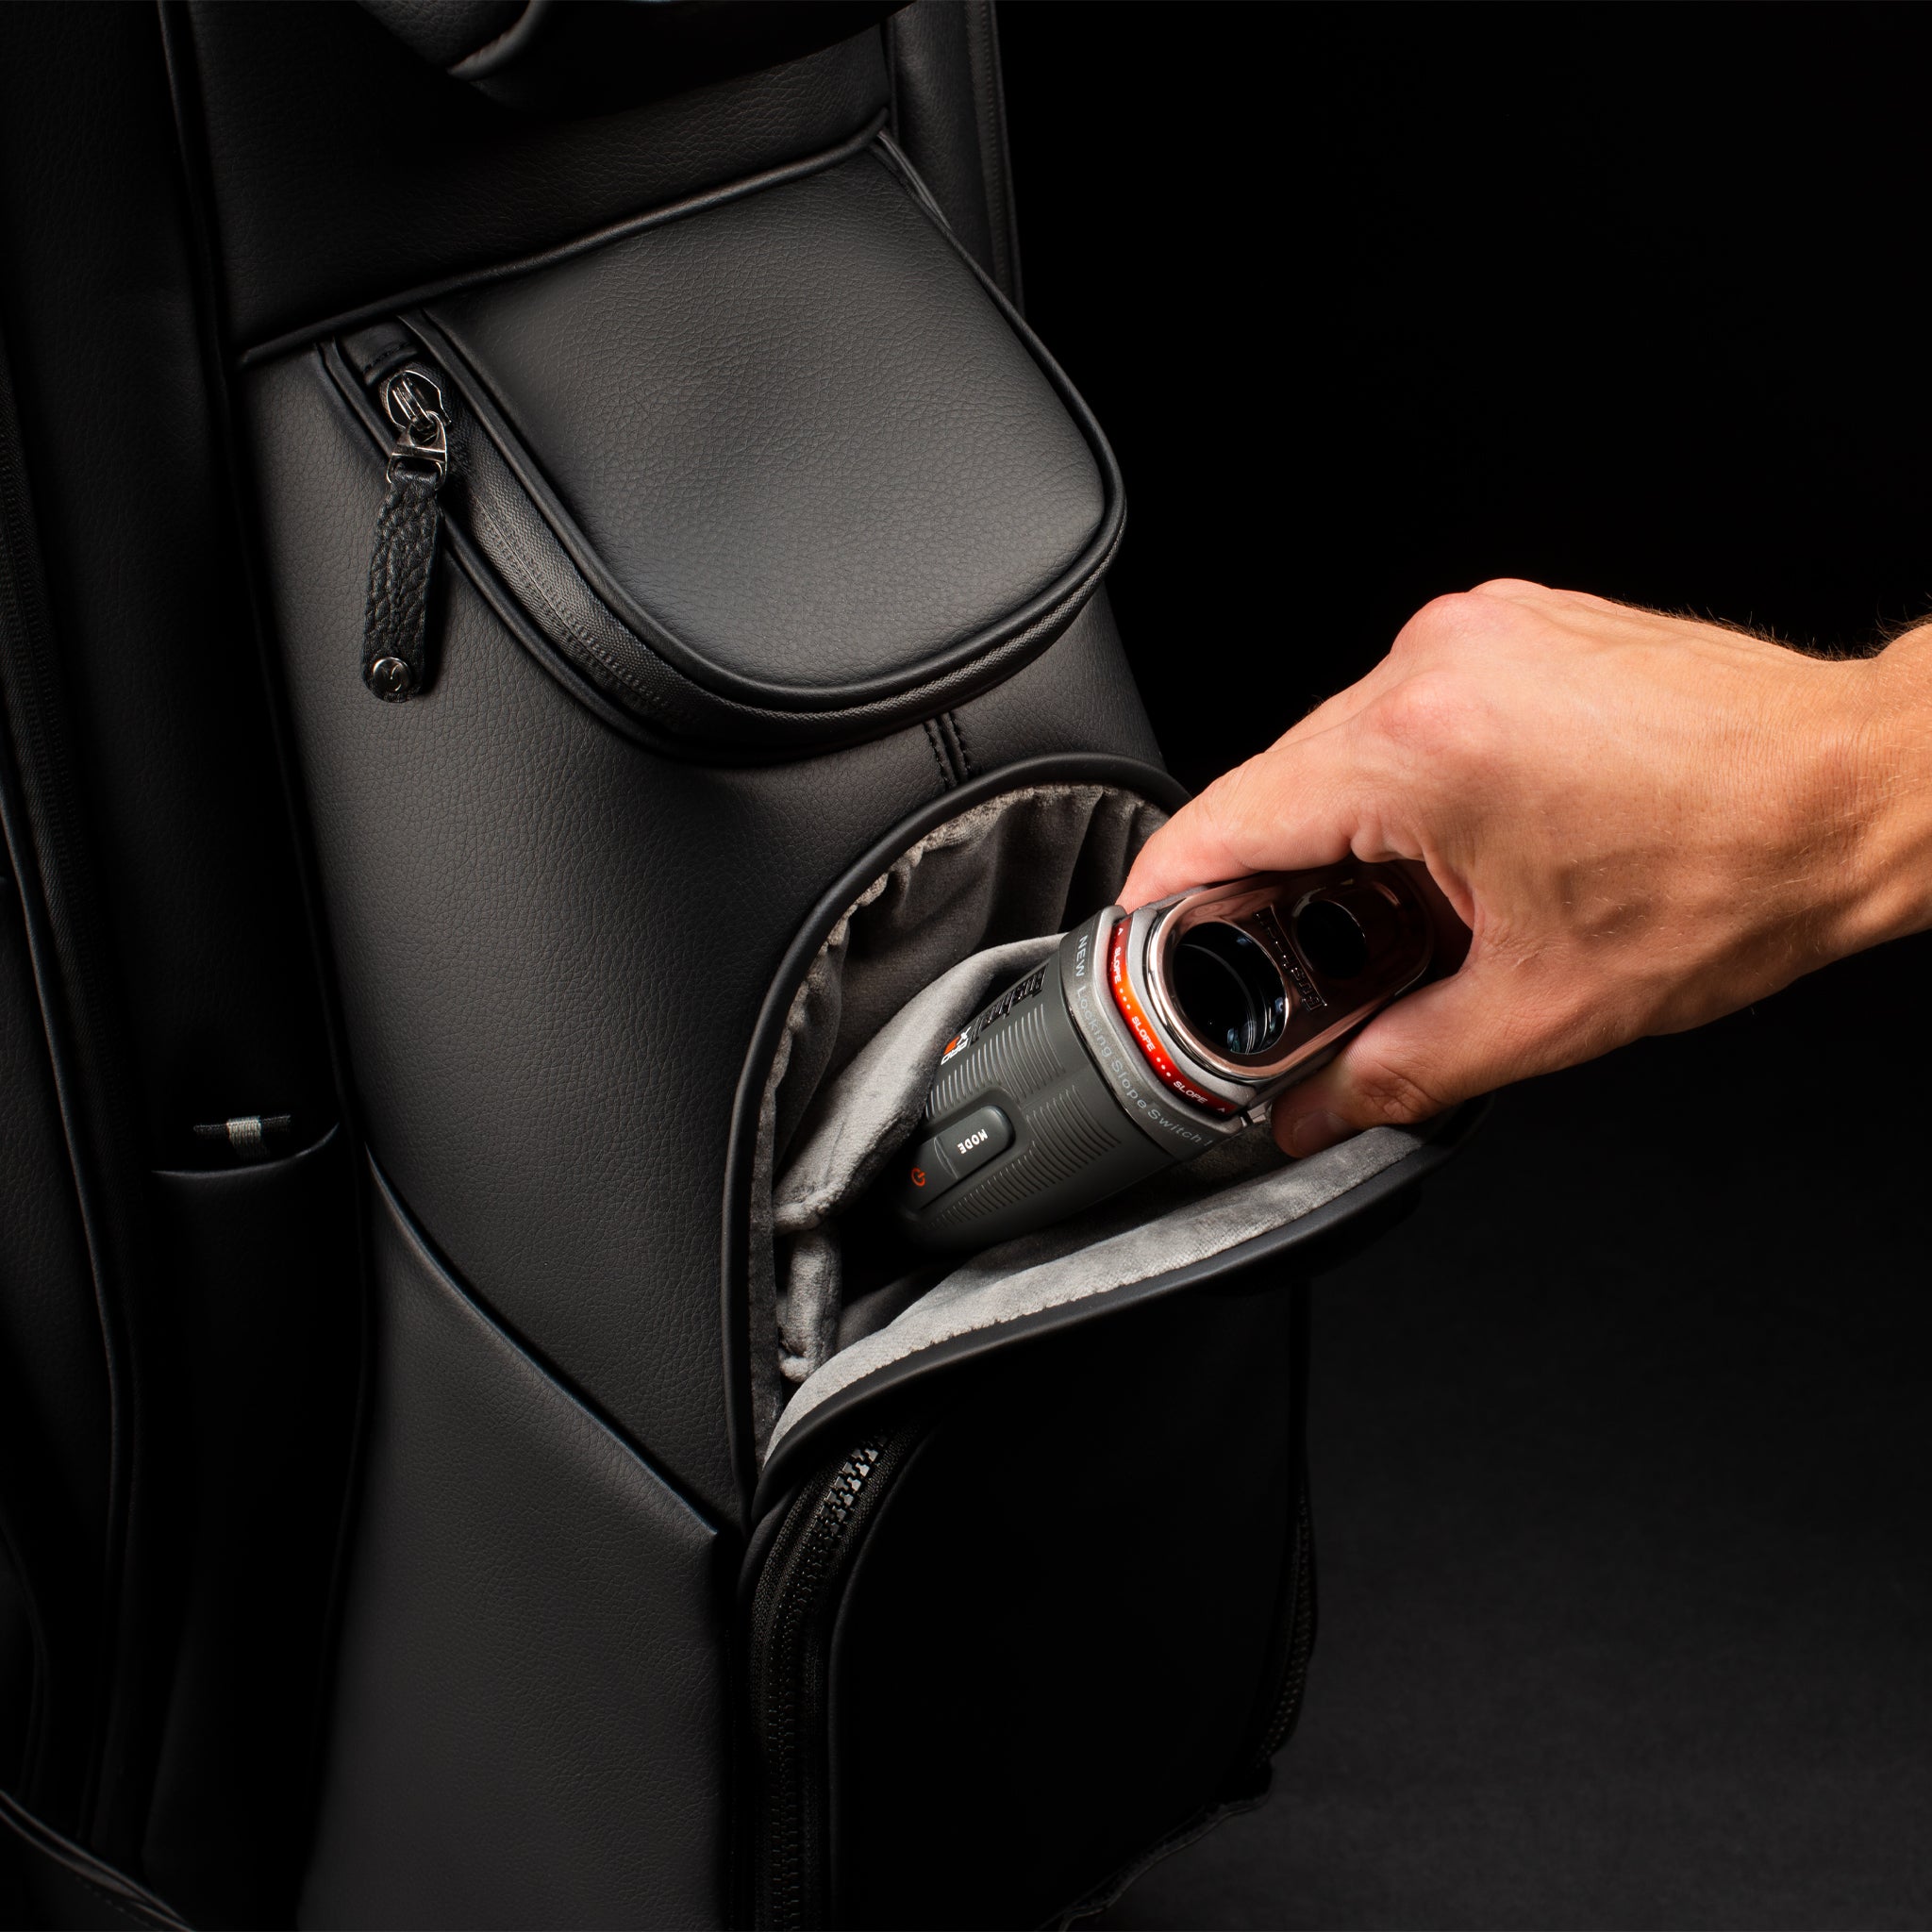 Lux XV 2.0 | Golf Cart Bag | VESSEL Golf